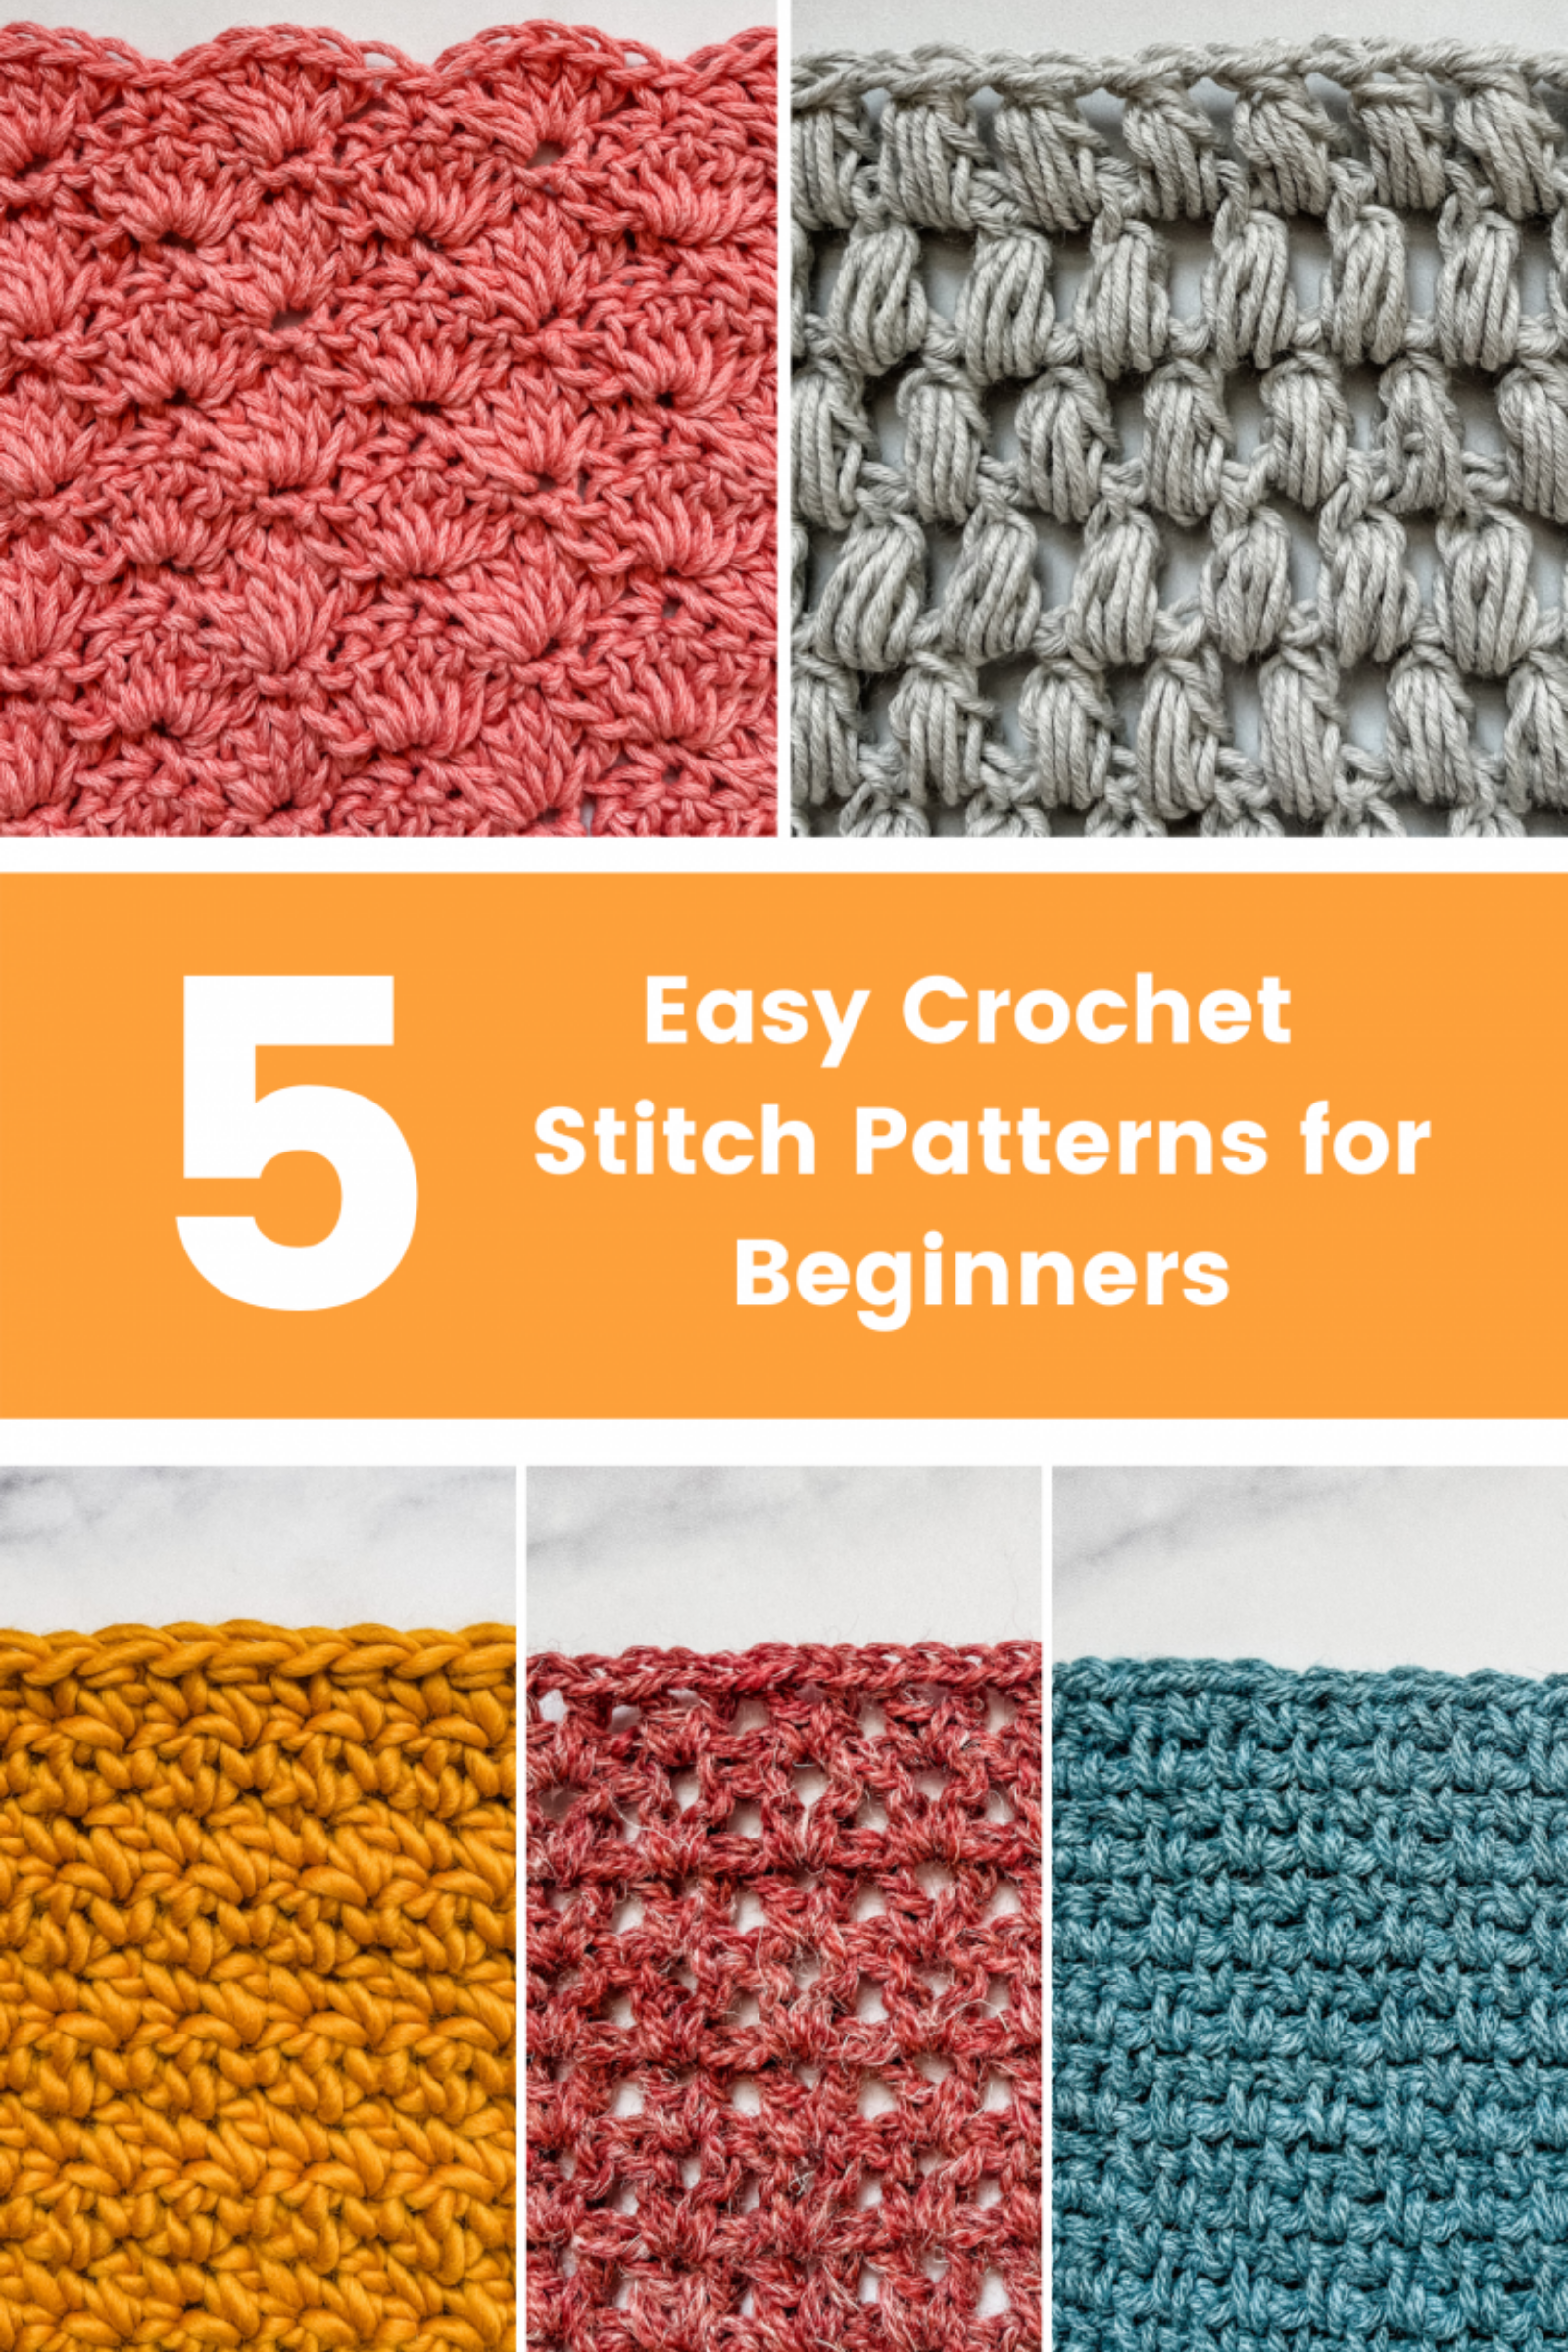 9 Easy Crochet Stitch Patterns for Beginners   TL Yarn Crafts